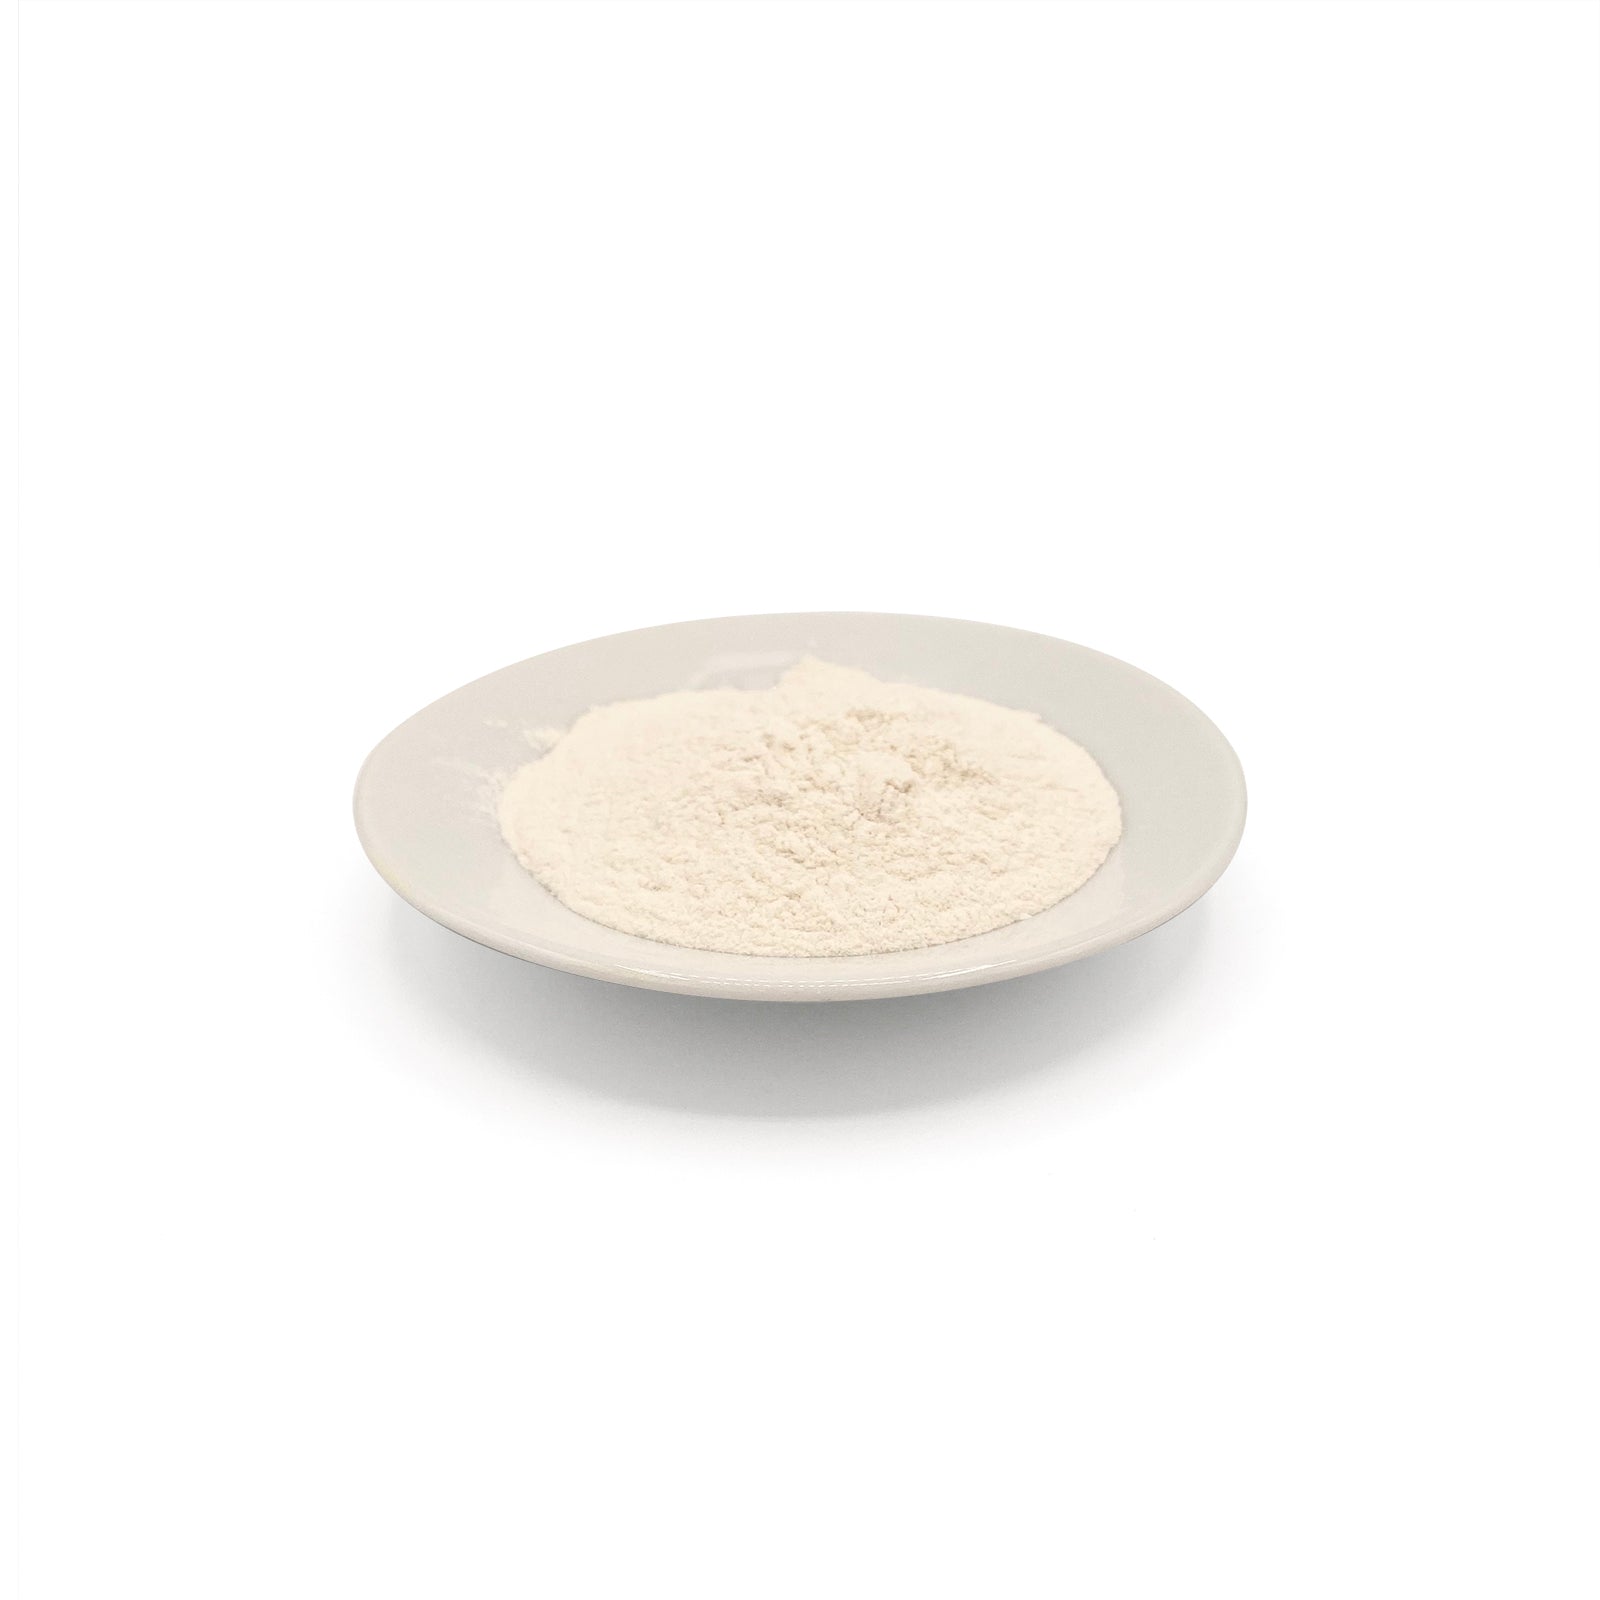  Kappa Carrageenan Powder 8 oz - For Vegan Mozzarella